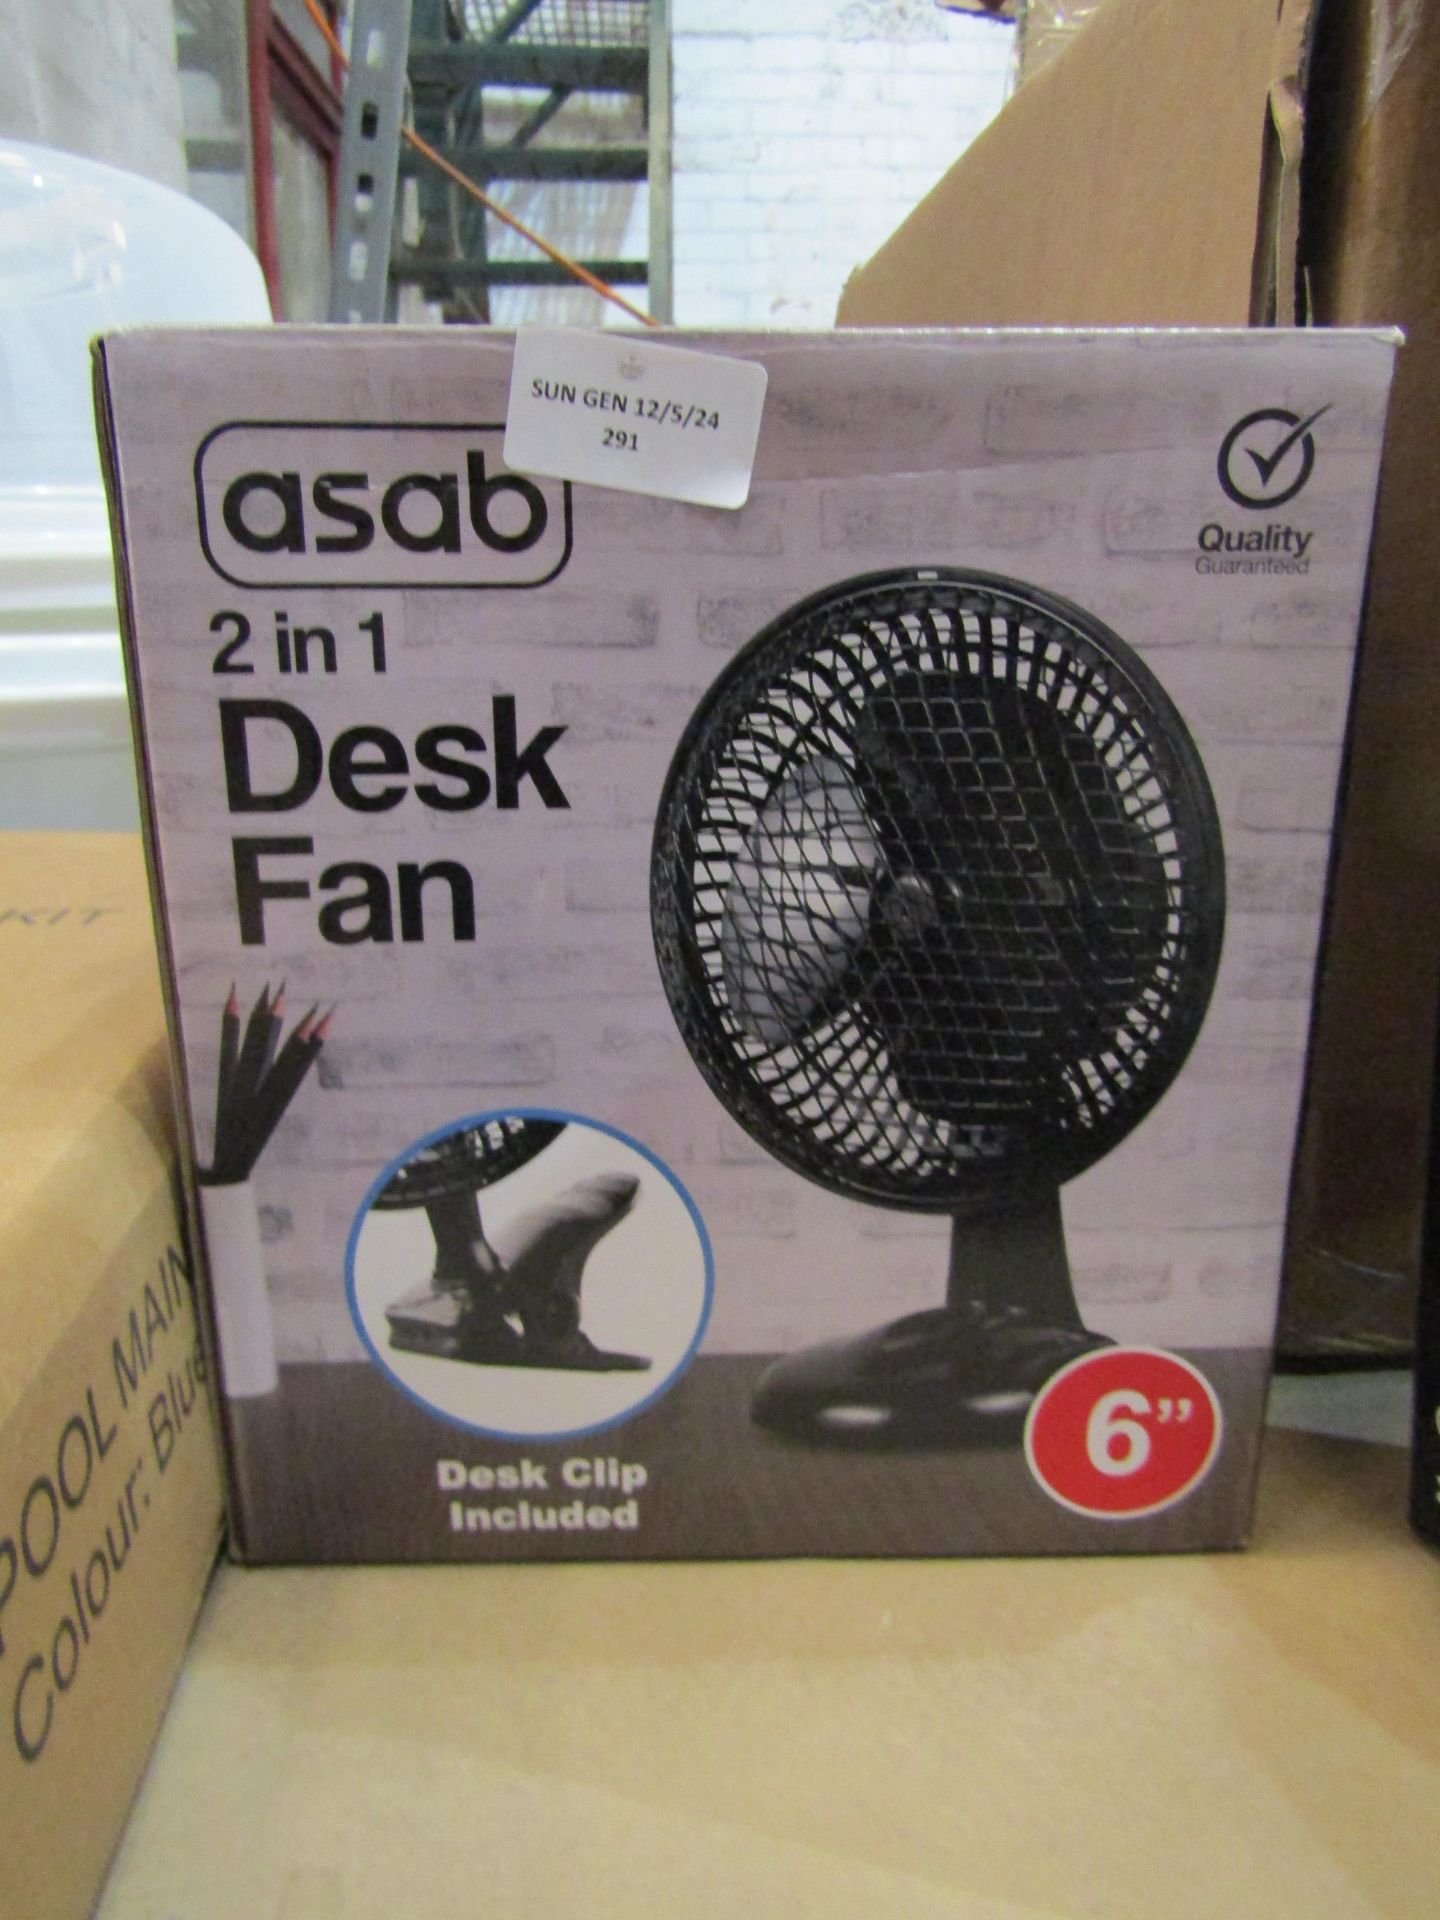 Asab 2 in 1 Desk Fan, 6" Unchecked & Boxed.